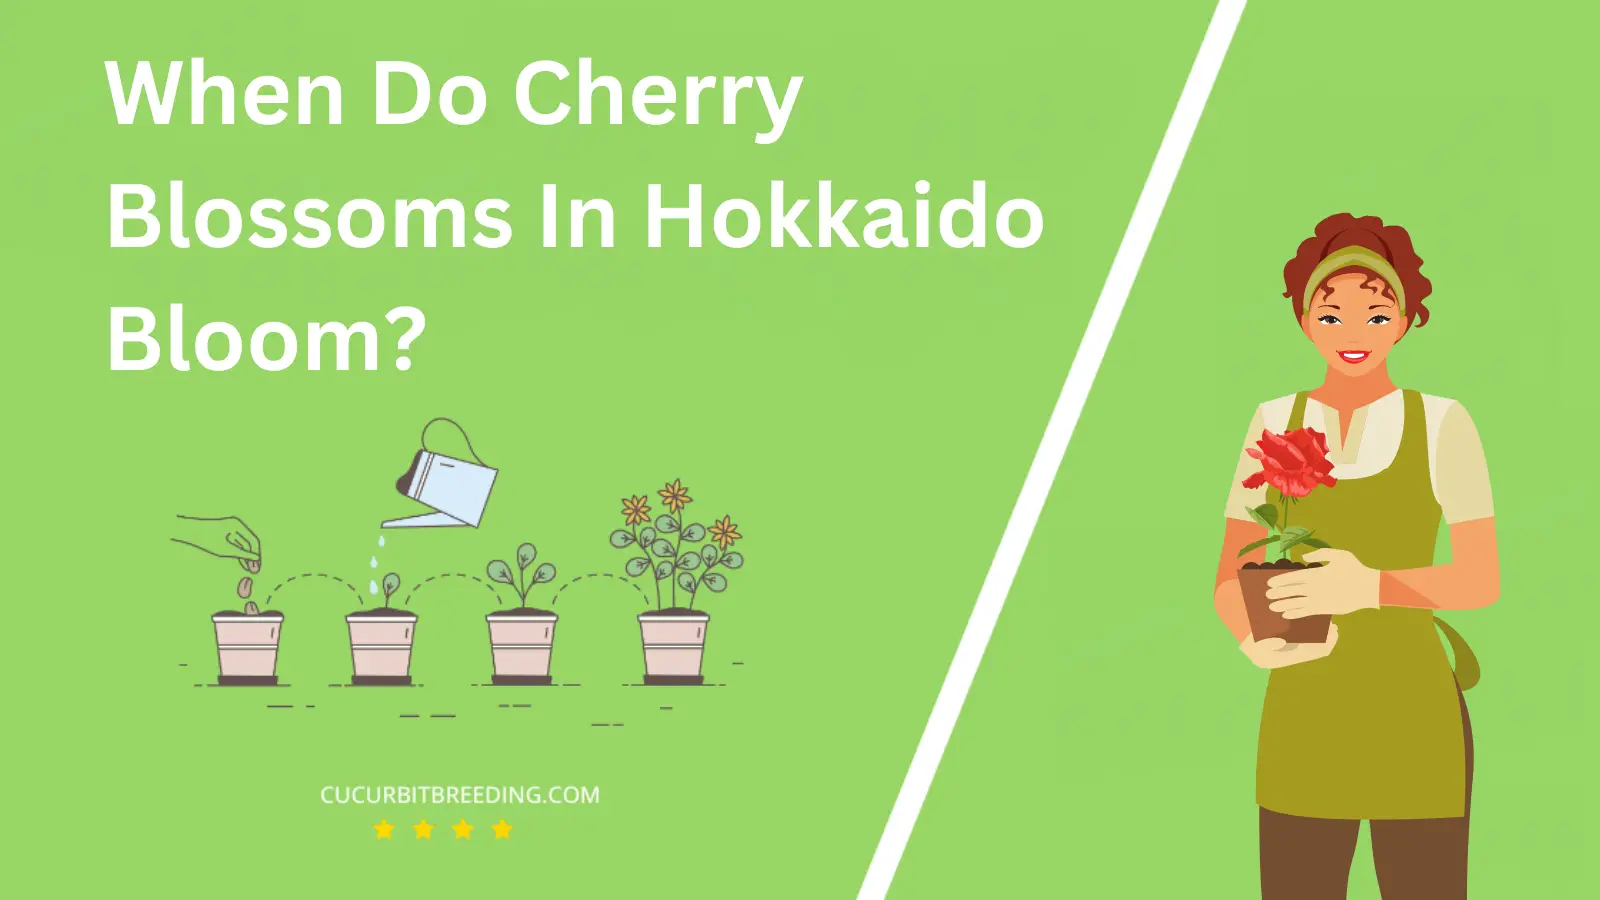 When Do Cherry Blossoms In Hokkaido Bloom?